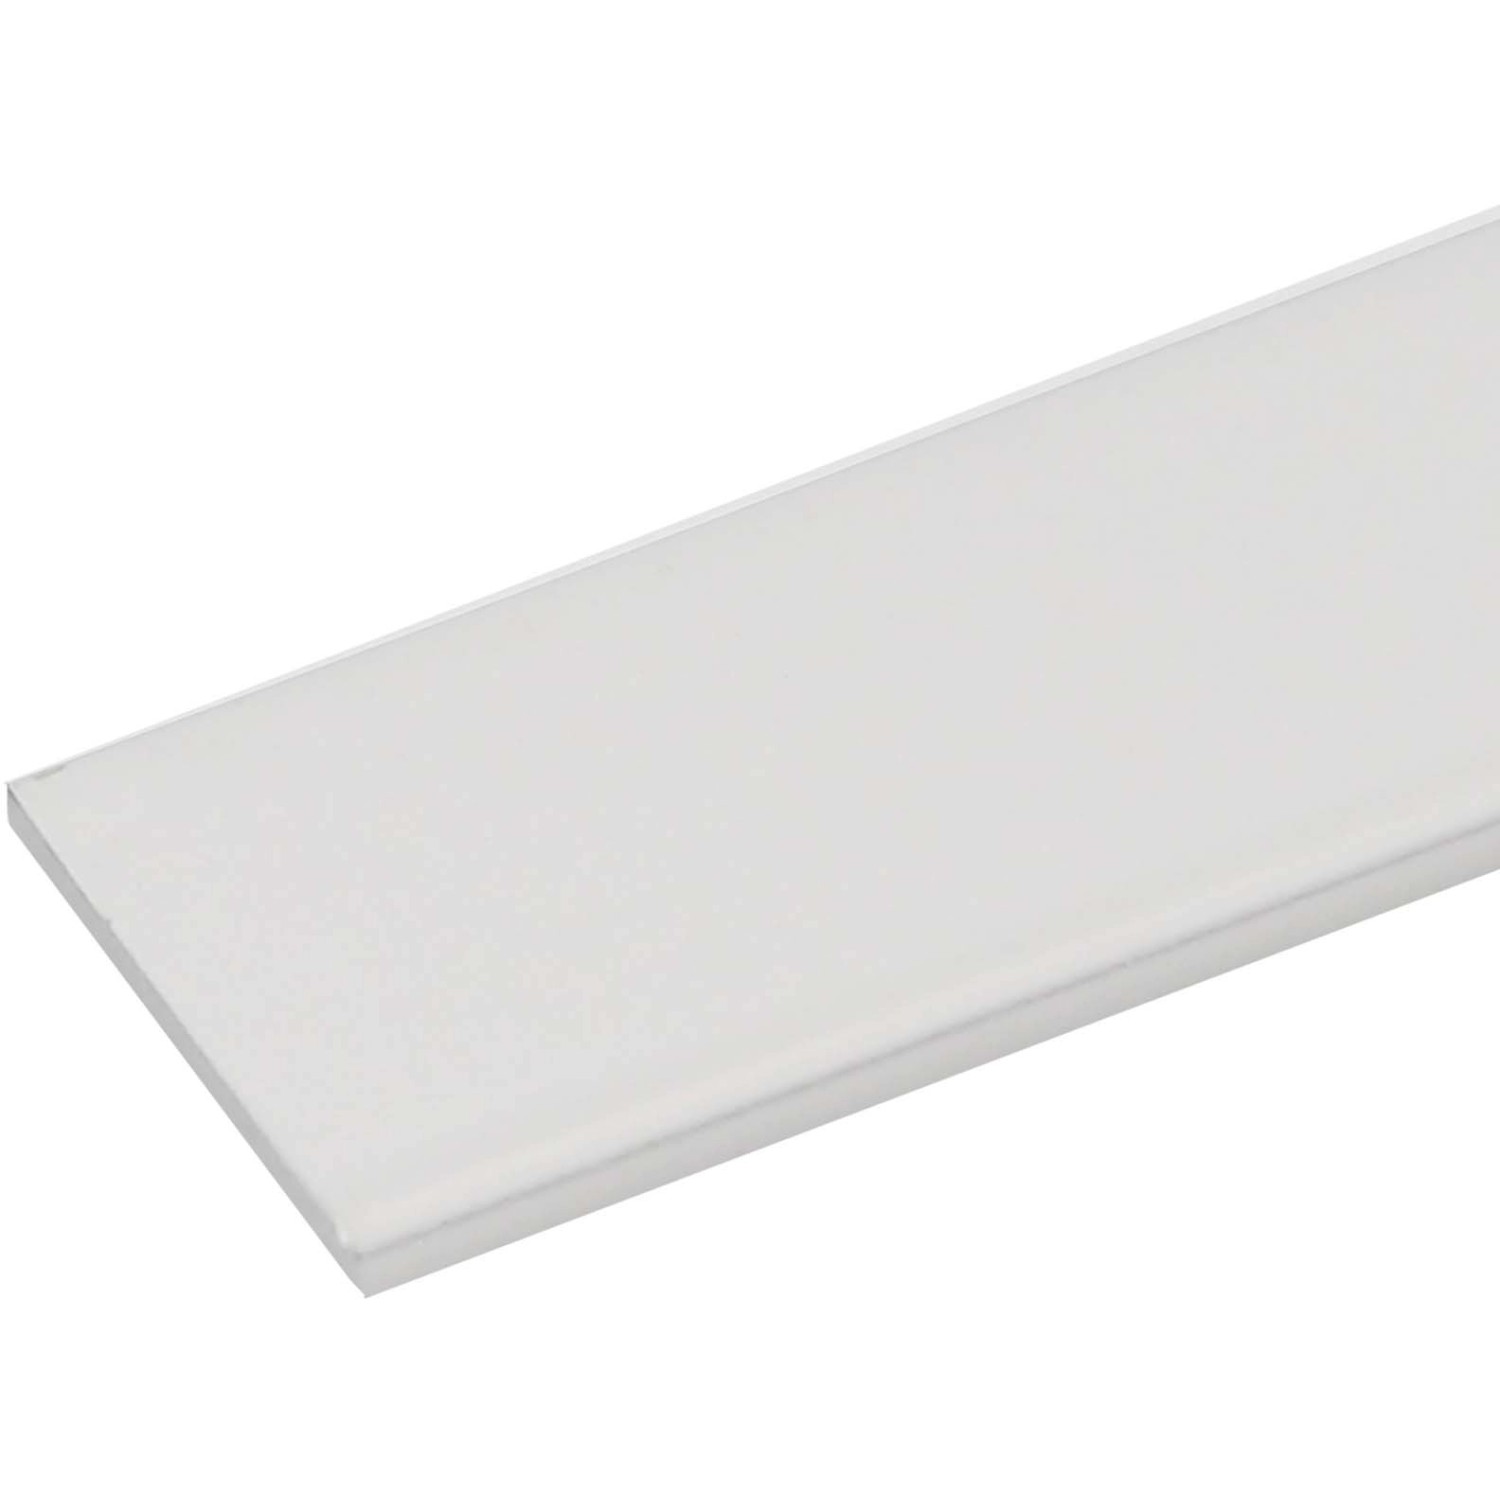 Arcansas Flachstange Aluminium Weiß lackiert 2 x 20 x 1000 mm